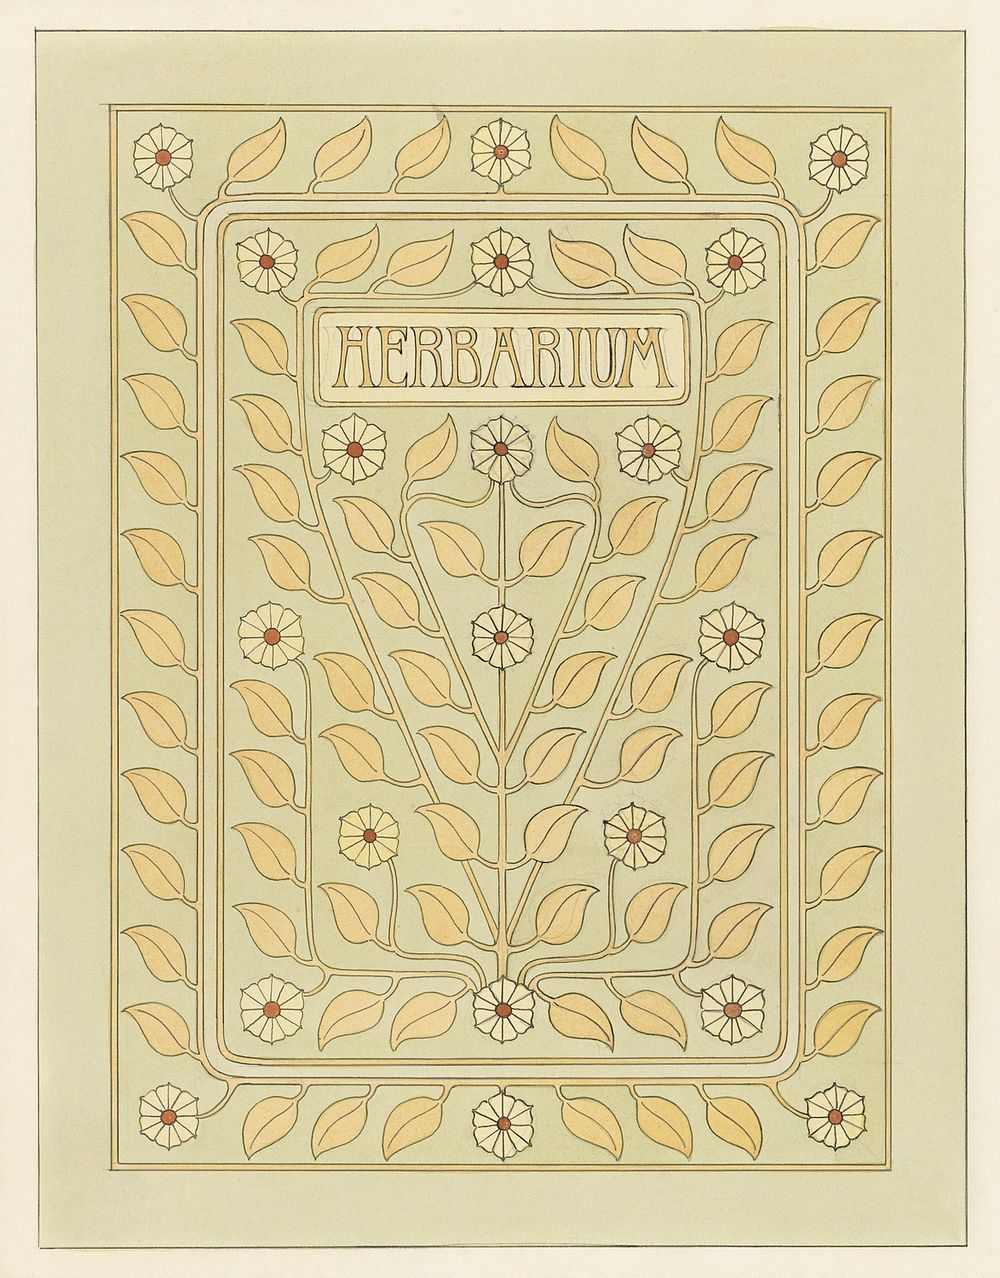 Design for Herbarium book cover by Julie de Graag (1877-1924). Original from The Rijksmuseum. Digitally enhanced by rawpixel.